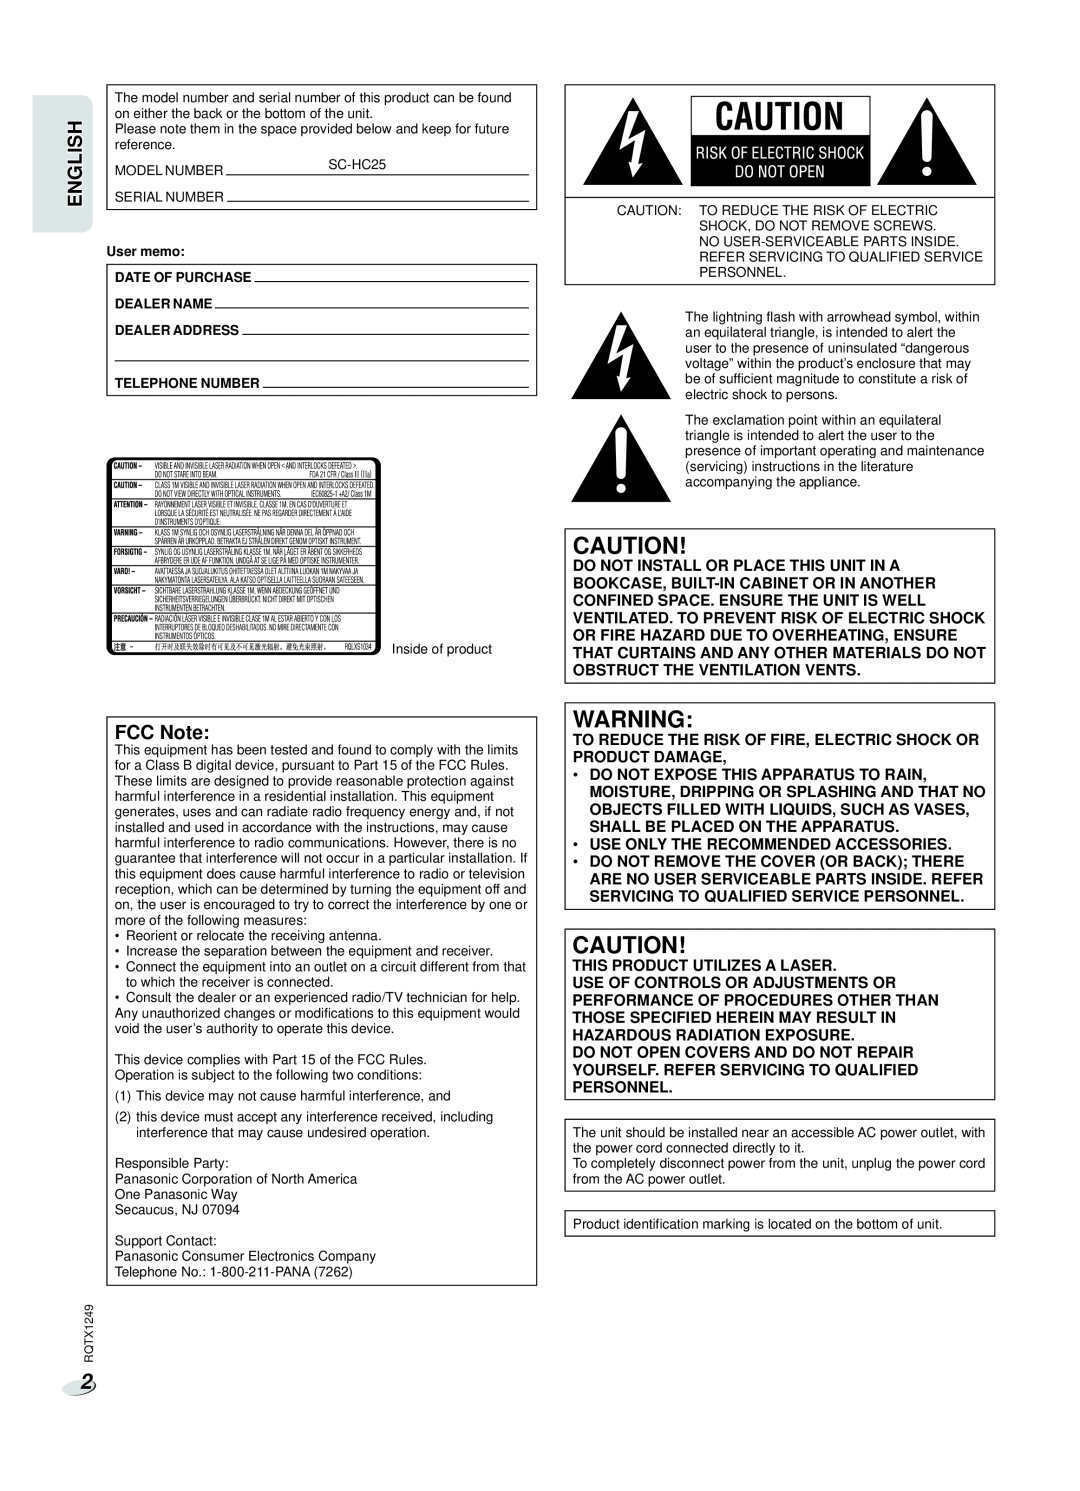 Panasonic SC-HC25 owner manual English, FCC Note 